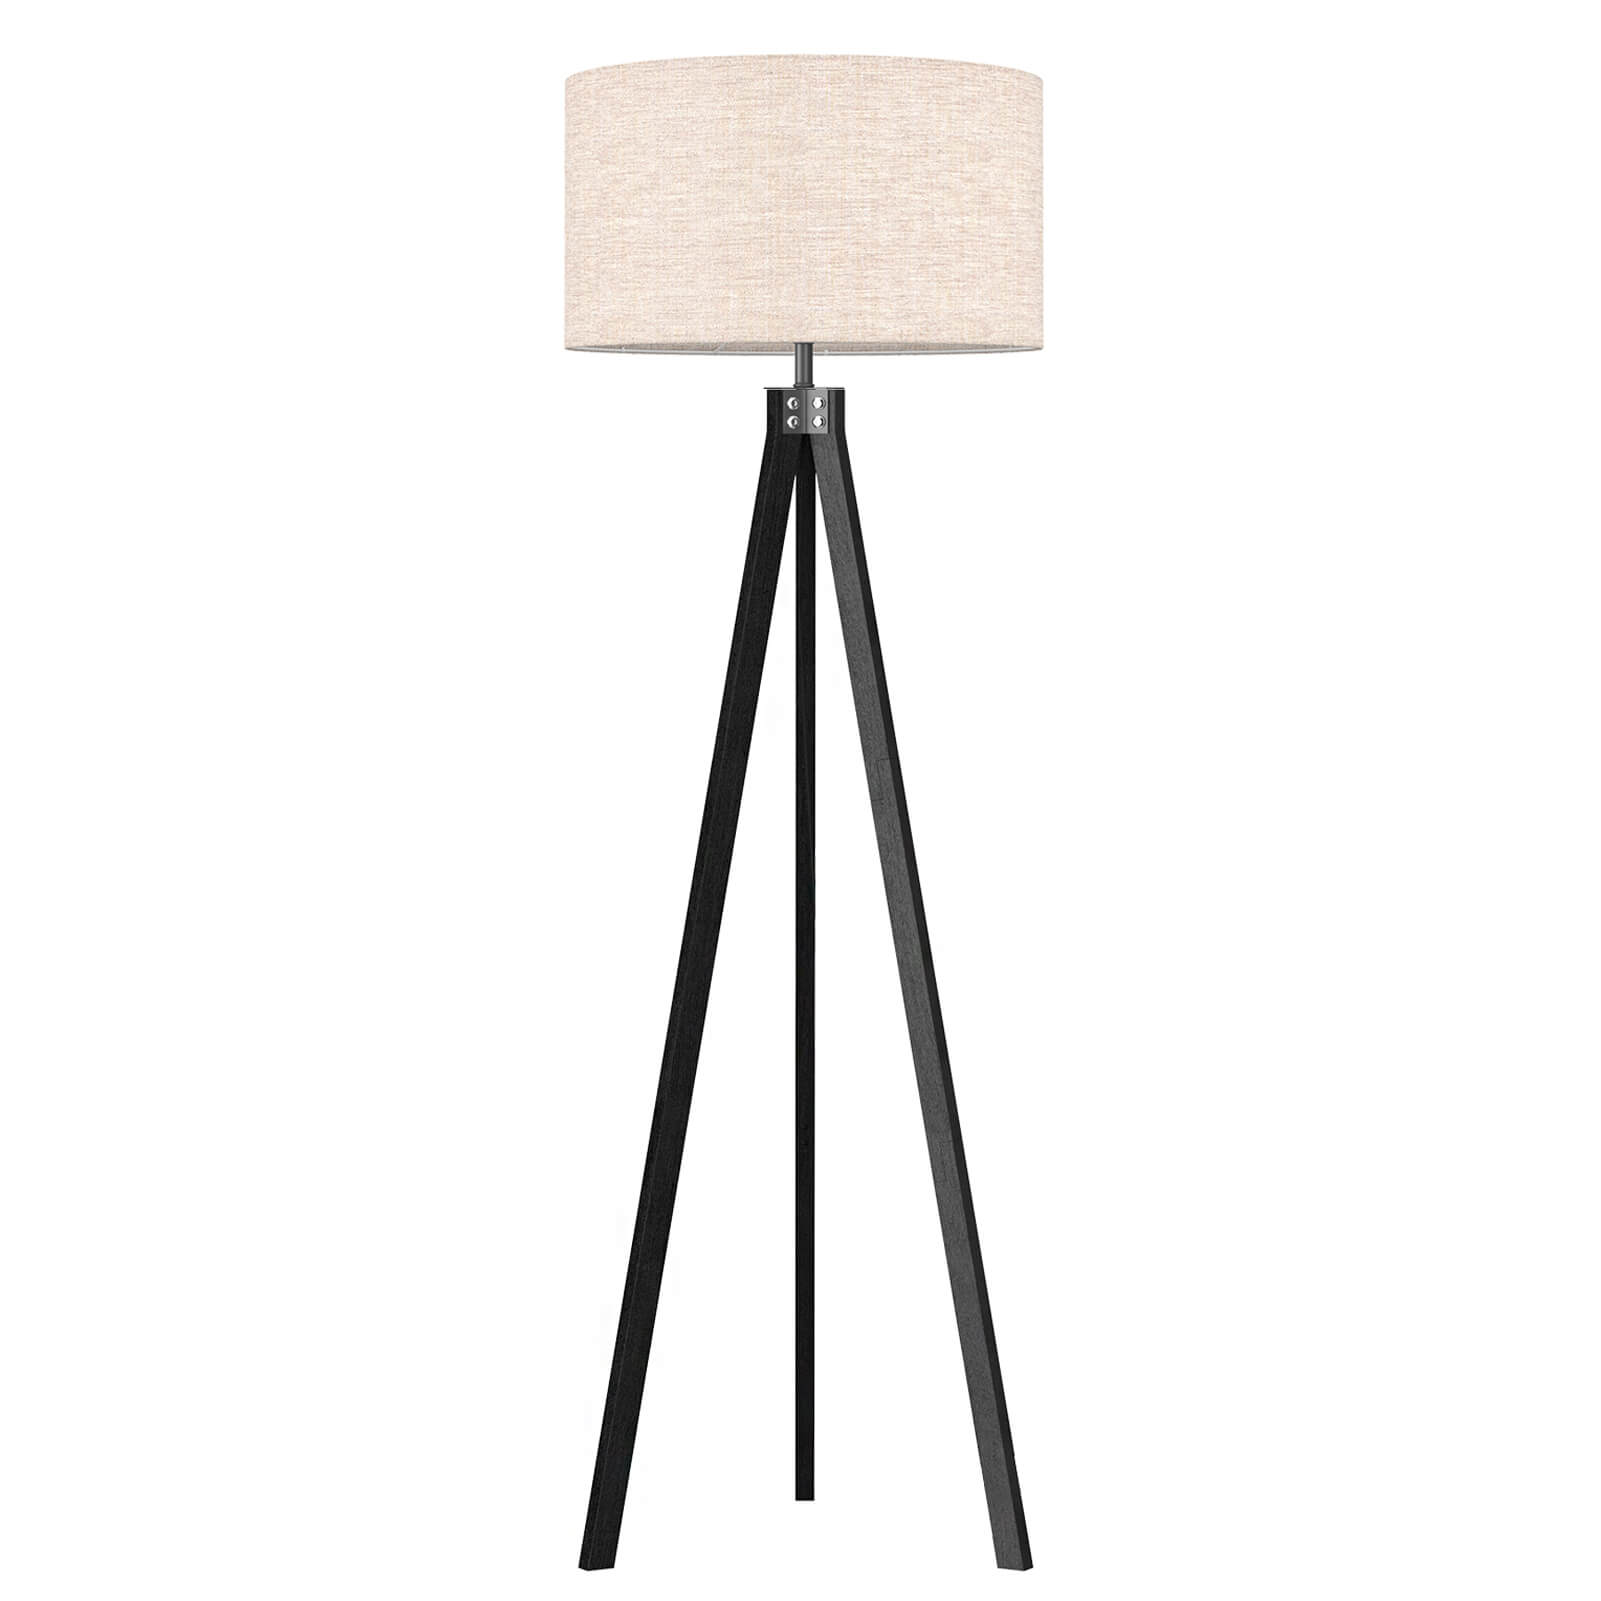 Wooden Tripod Floor Lamp with 3 Leg